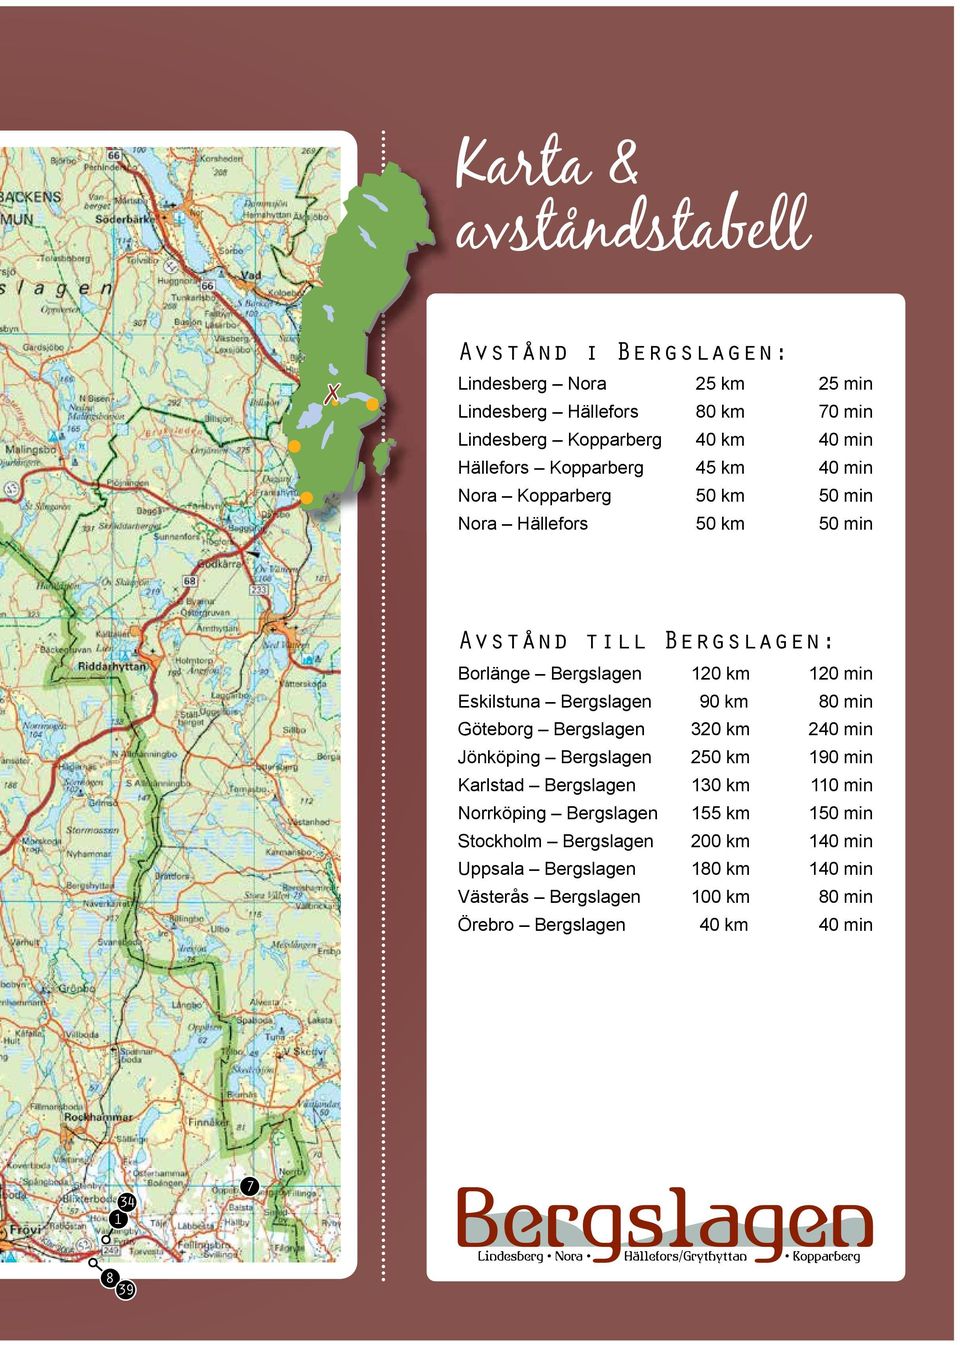 Bergslagen 90 km 80 min Göteborg Bergslagen 320 km 240 min Jönköping Bergslagen 250 km 190 min Karlstad Bergslagen 130 km 110 min Norrköping Bergslagen